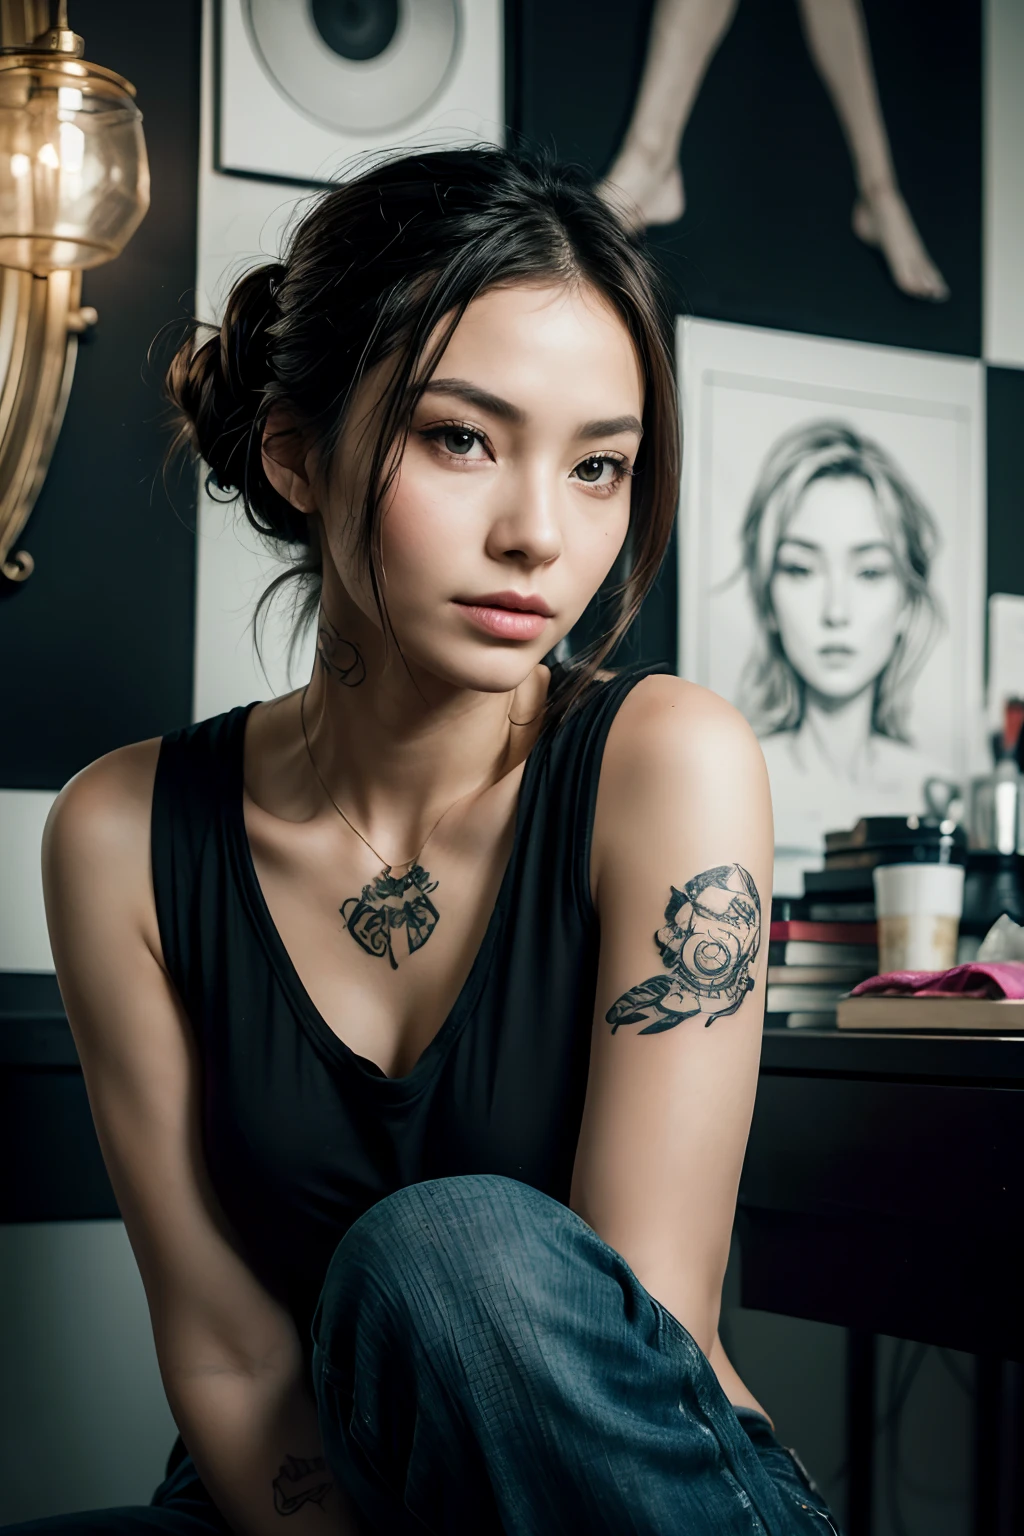 1 名女性, 獨自的, raw portrait oF (Female tattoo artist:0.3) , she sits in her tattoo studio in Front oF a (darkly painted 牆 covered in tiny intricate tattoo drawings:1.3)), a variety oF tattoo drawings), interior oF the tattoo studio we see latest tattoo guns, 墨水, 卫生用品和灵感, 她拿著刺青工具, 實際的 photo, (40% oF photo is black in drawing:1.4), 她有一个 (惊人的纹身:0.3) 技能 , (她穿著印有可愛圖案的黑色 T 卹, 深色牛仔褲, 头发上的头巾, 刺耳) 并且全神贯注地看着相机 (工作室霓虹灯:0.3), 煙, (林布蘭燈光:0.9) ,(輕鬆親密的拍攝), beautiFul Face, 微微一笑, 強烈的存在感, (Dai woman),neck tattoo oF masterpiece, 极其细致的艺术作品, ((牆: 常见设计, usually drawn on paper or cardboard and displayed prominently on the 牆s or in binders in some tattoo shops. 纹身工作室的选择可能会让人很着迷)) , 舒适轻松, 抓住我们, beautiFul hands, 善良的眼睛, 华丽的温暖灯光:1.4, Zhuo Dan Ting, 令人難以置信的細節, ((高對比度)), (深的, 最暗的陰影), (陰影細節:1.0), ((使用徠卡相機拍攝, 光圈: F/2.3)) , hyper-實際的 skin, 毛孔, 瘢痕, 痣, (she has dark hair pulled away From Face, 整齊的髮髻), 煙燻眼妝, 紋身皮膚,, 她的手臂放松了 , 放松的时刻, 她在黑暗中，有著自然光的光芒, (浪漫的光:1.2), 容光焕发的肌肤, perFectly Framed Face, perFect relaxed hands, perFect Fingers, (perFect portrait, 難以置信的眼睛:1.1), a work oF art,sexy beautiFul composition, 黃金比例, 鼓舞人心的, (highest quality Fabric texture), 每個細節,Fine Facial Features – (最好的品質) ,Leica camera Film, 高品質 ○○ 詳細 – ○○ 細節 超詳細(Ultra-Fine ), Photo實際的, 非常詳細(非常詳細) , (最高細節影像, lens Flare, 實際的)○○ 解析度 – ○○ 解析度超高分辨率(高解析度),playFul relaxed photos